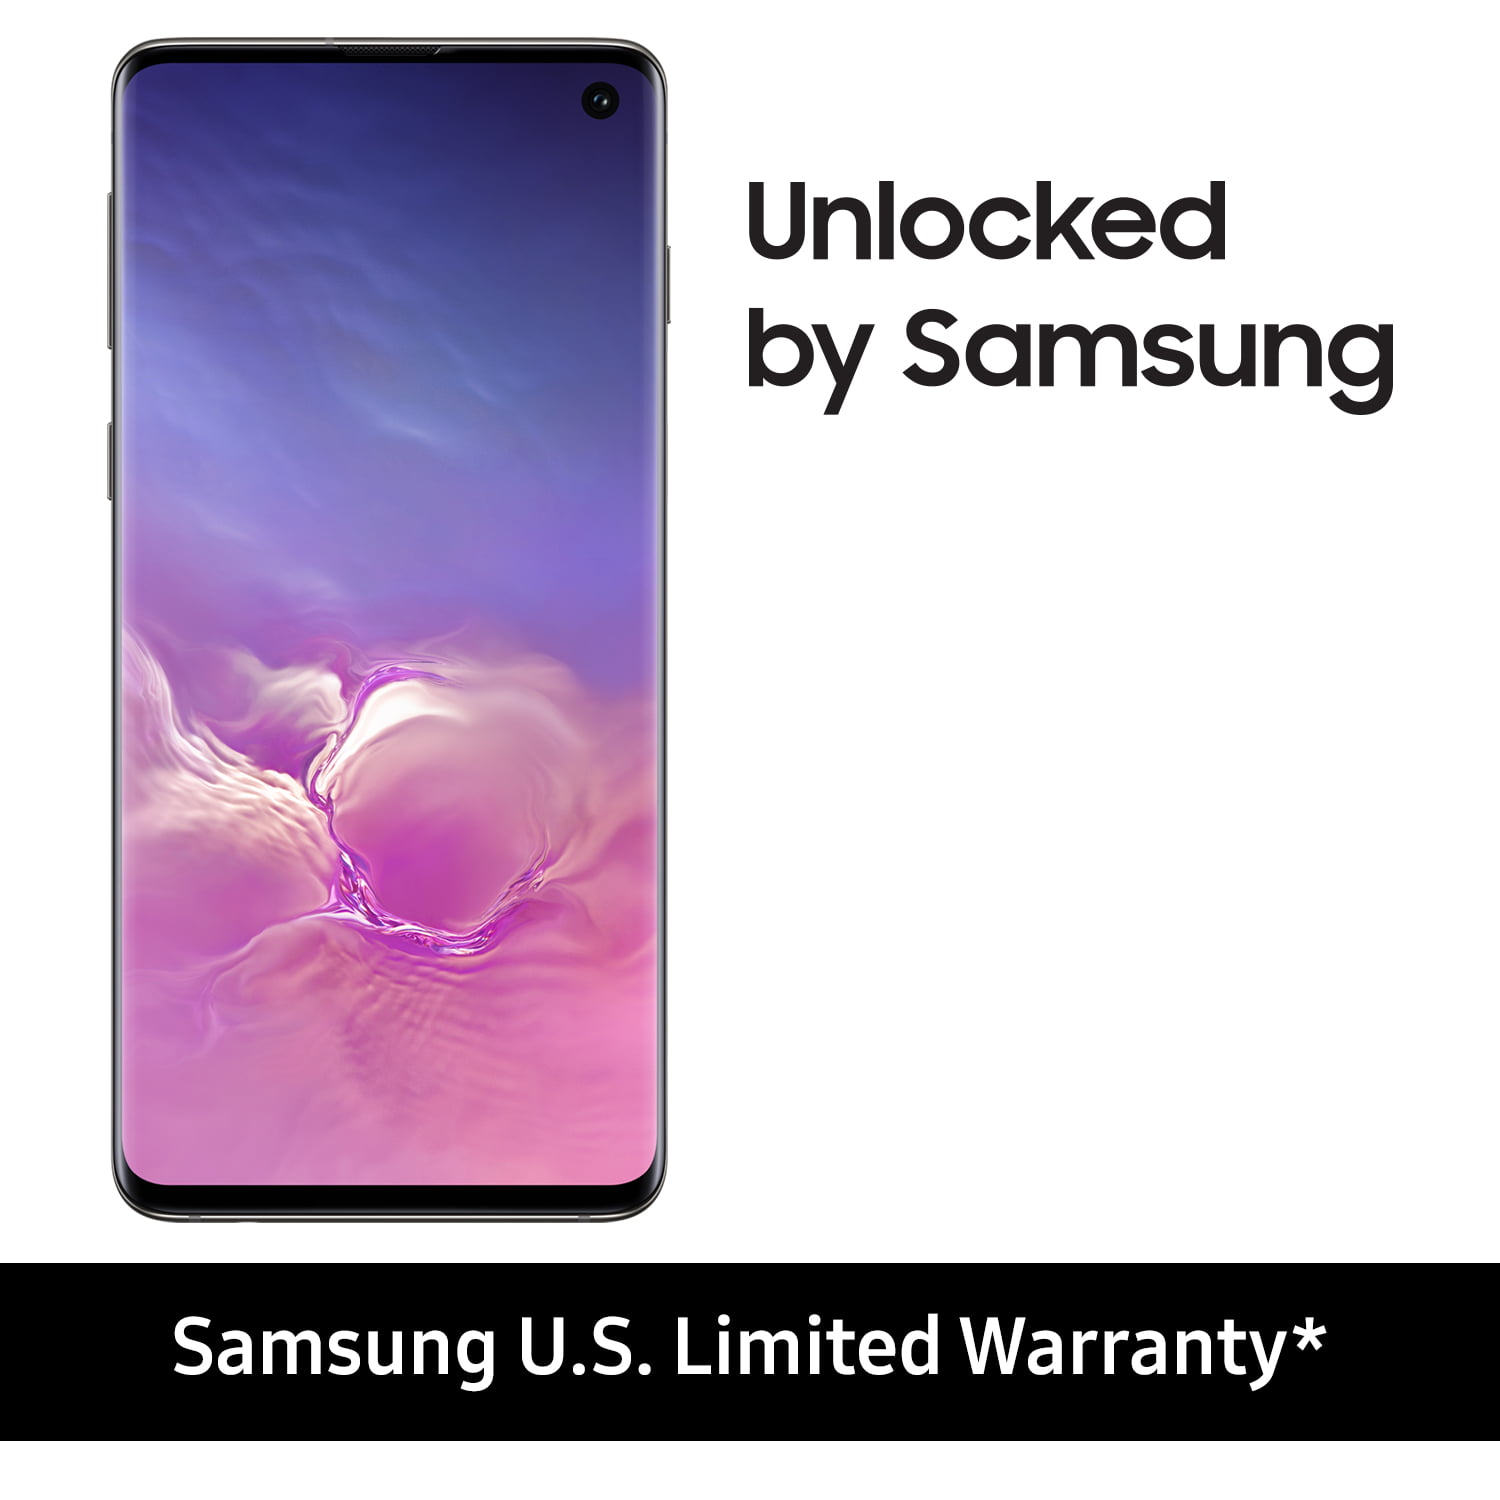 Samsung Galaxy S10 Factory Unlocked with 128GB (U.S. Warranty), Prism Black